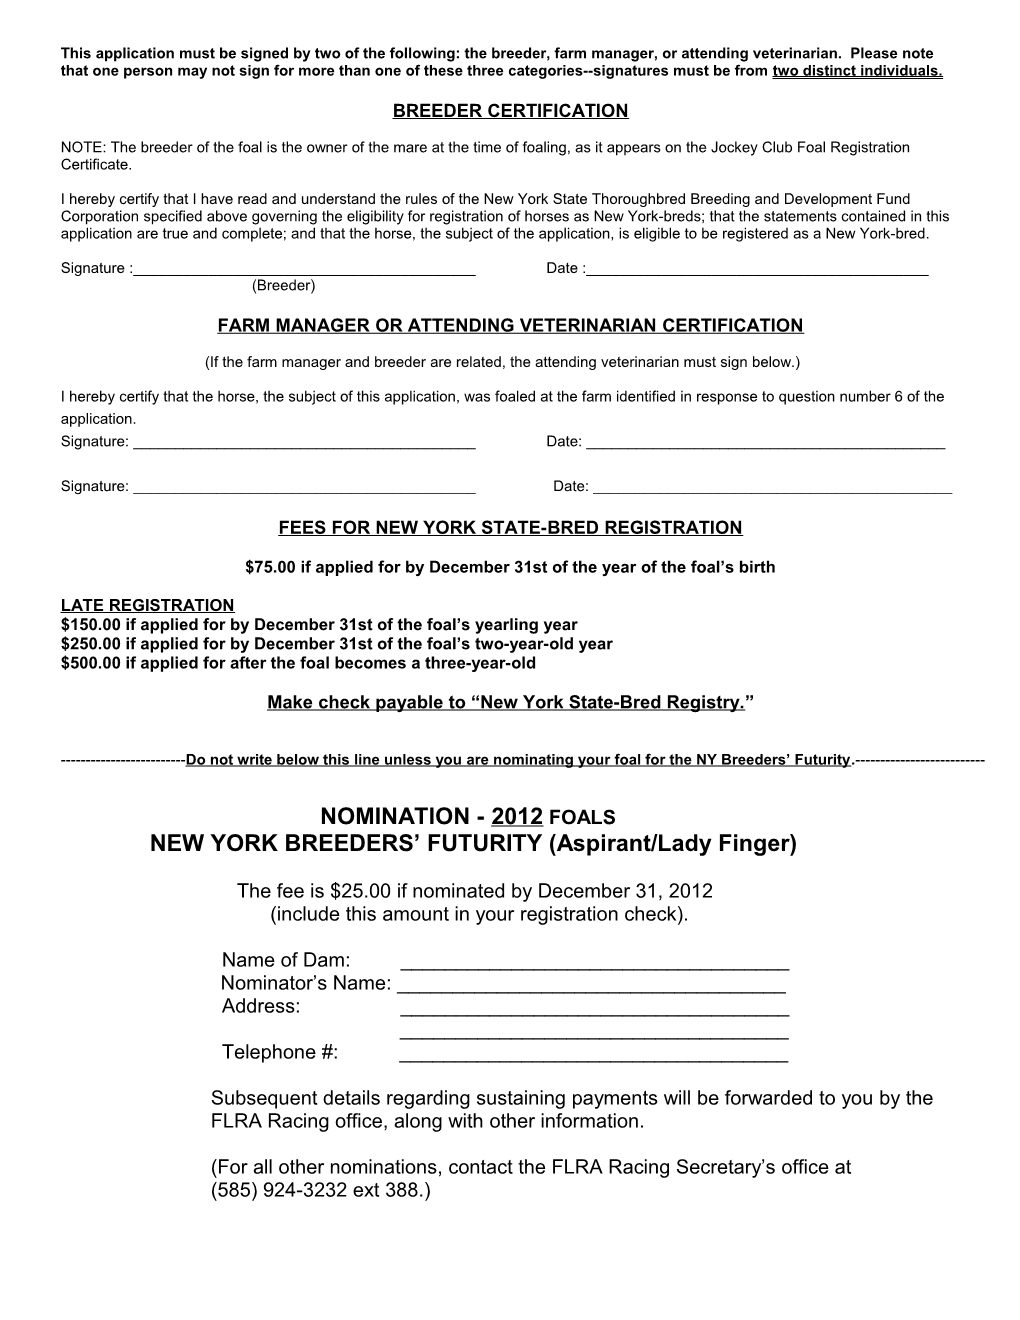 New York State-Bred Registration Of